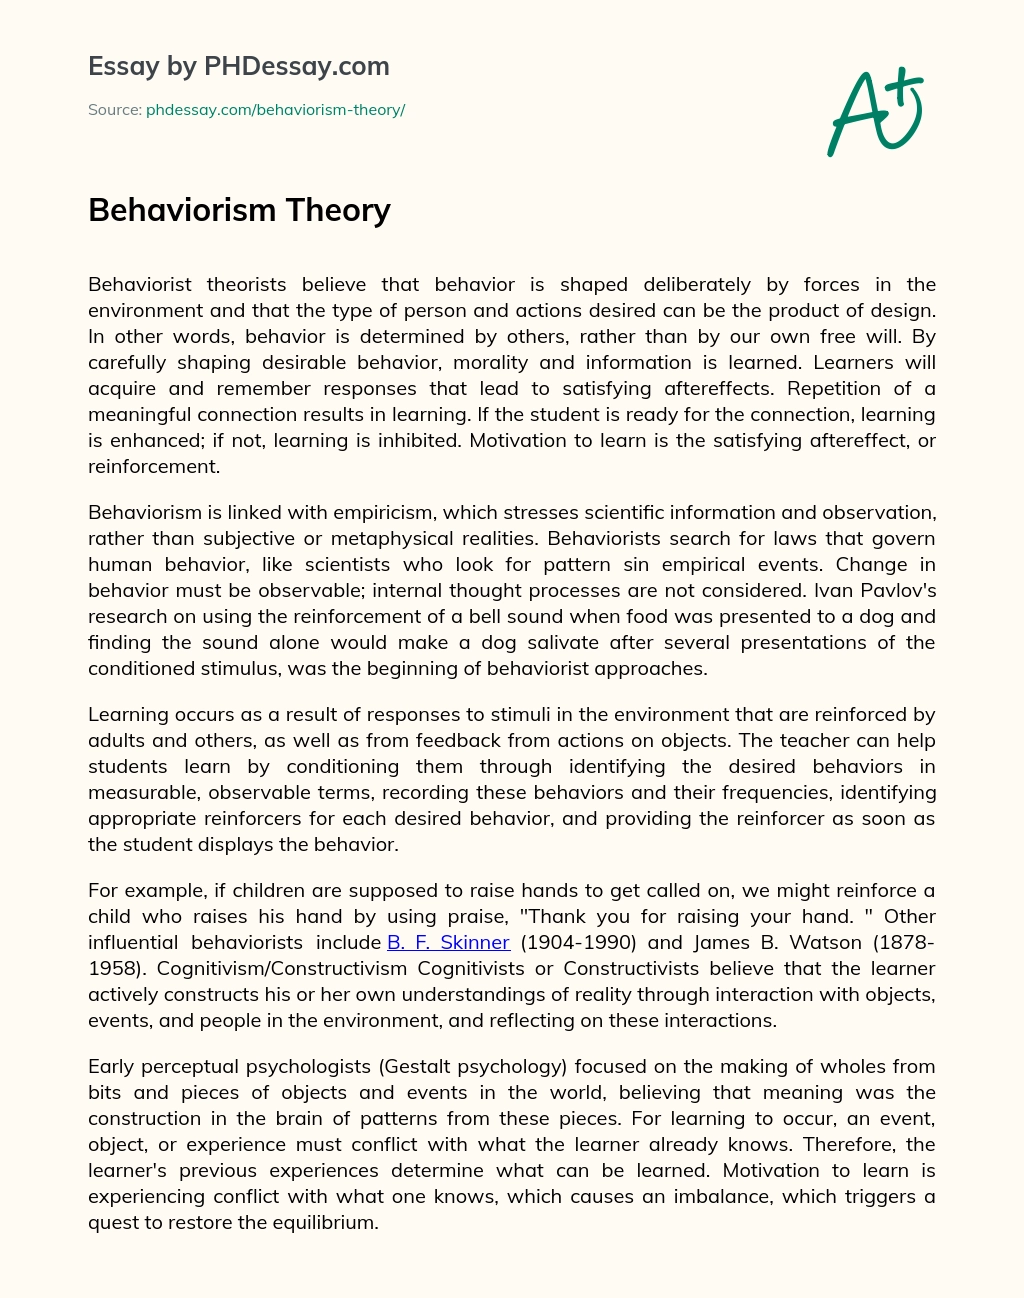 Behaviorism Theory essay